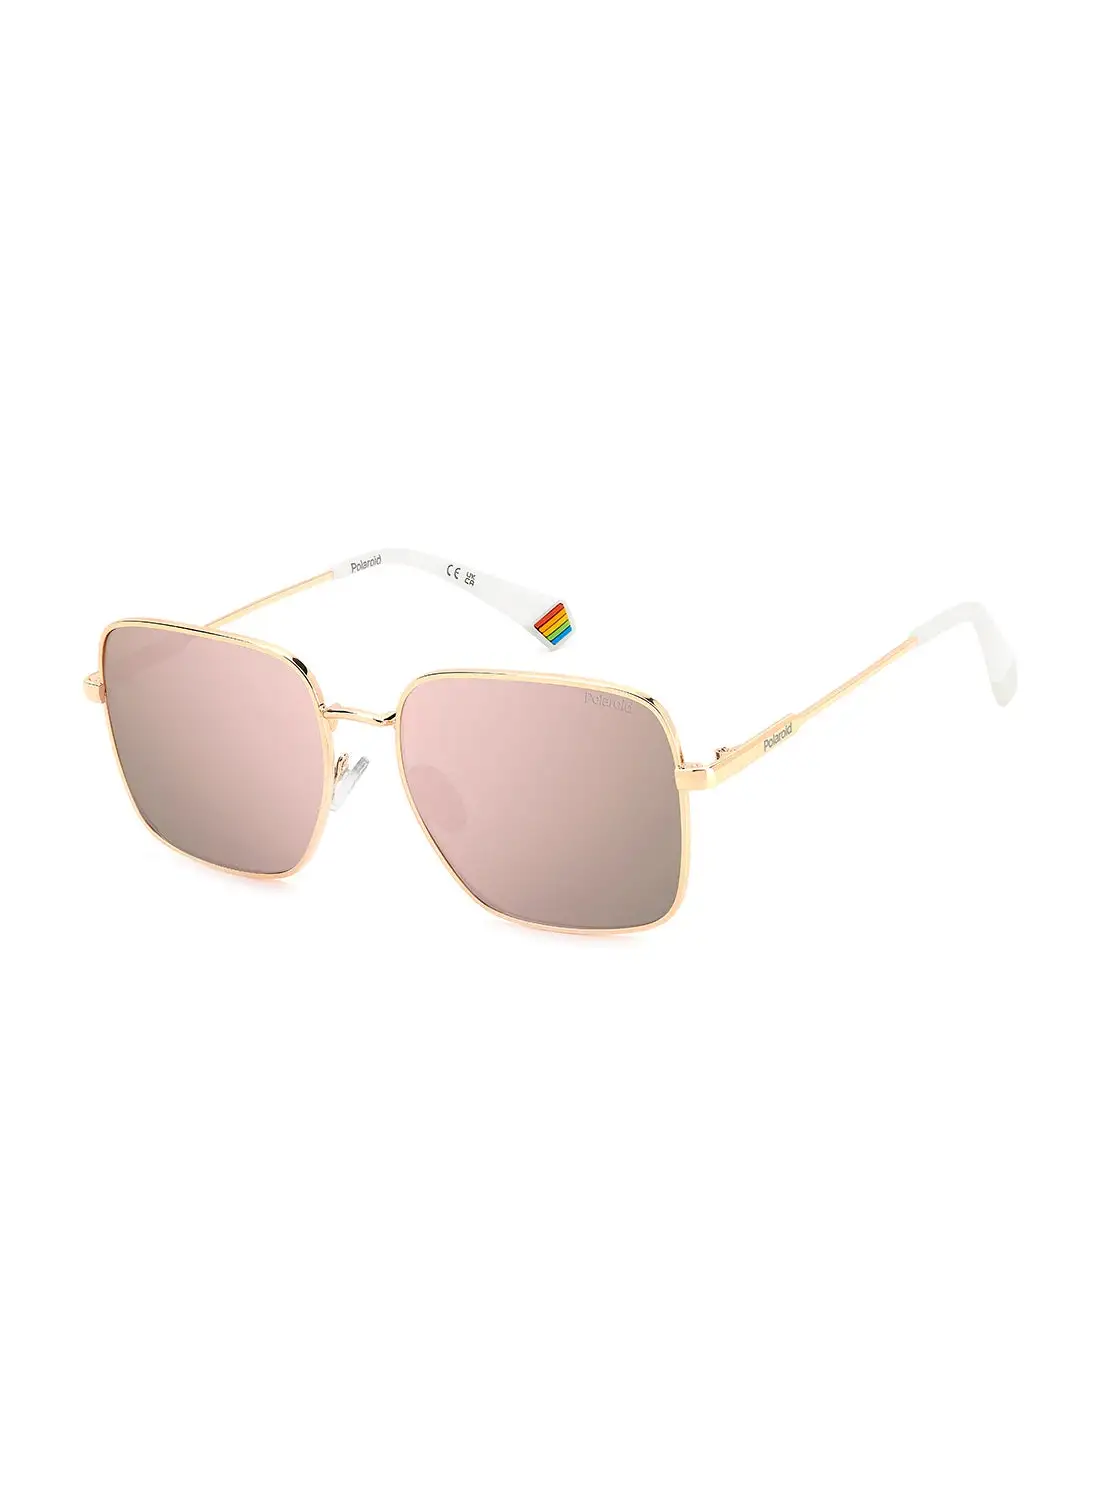 Polaroid Women's Polarized Square Sunglasses - Pld 6194/S/X Gold Millimeter - Lens Size: 56 Mm